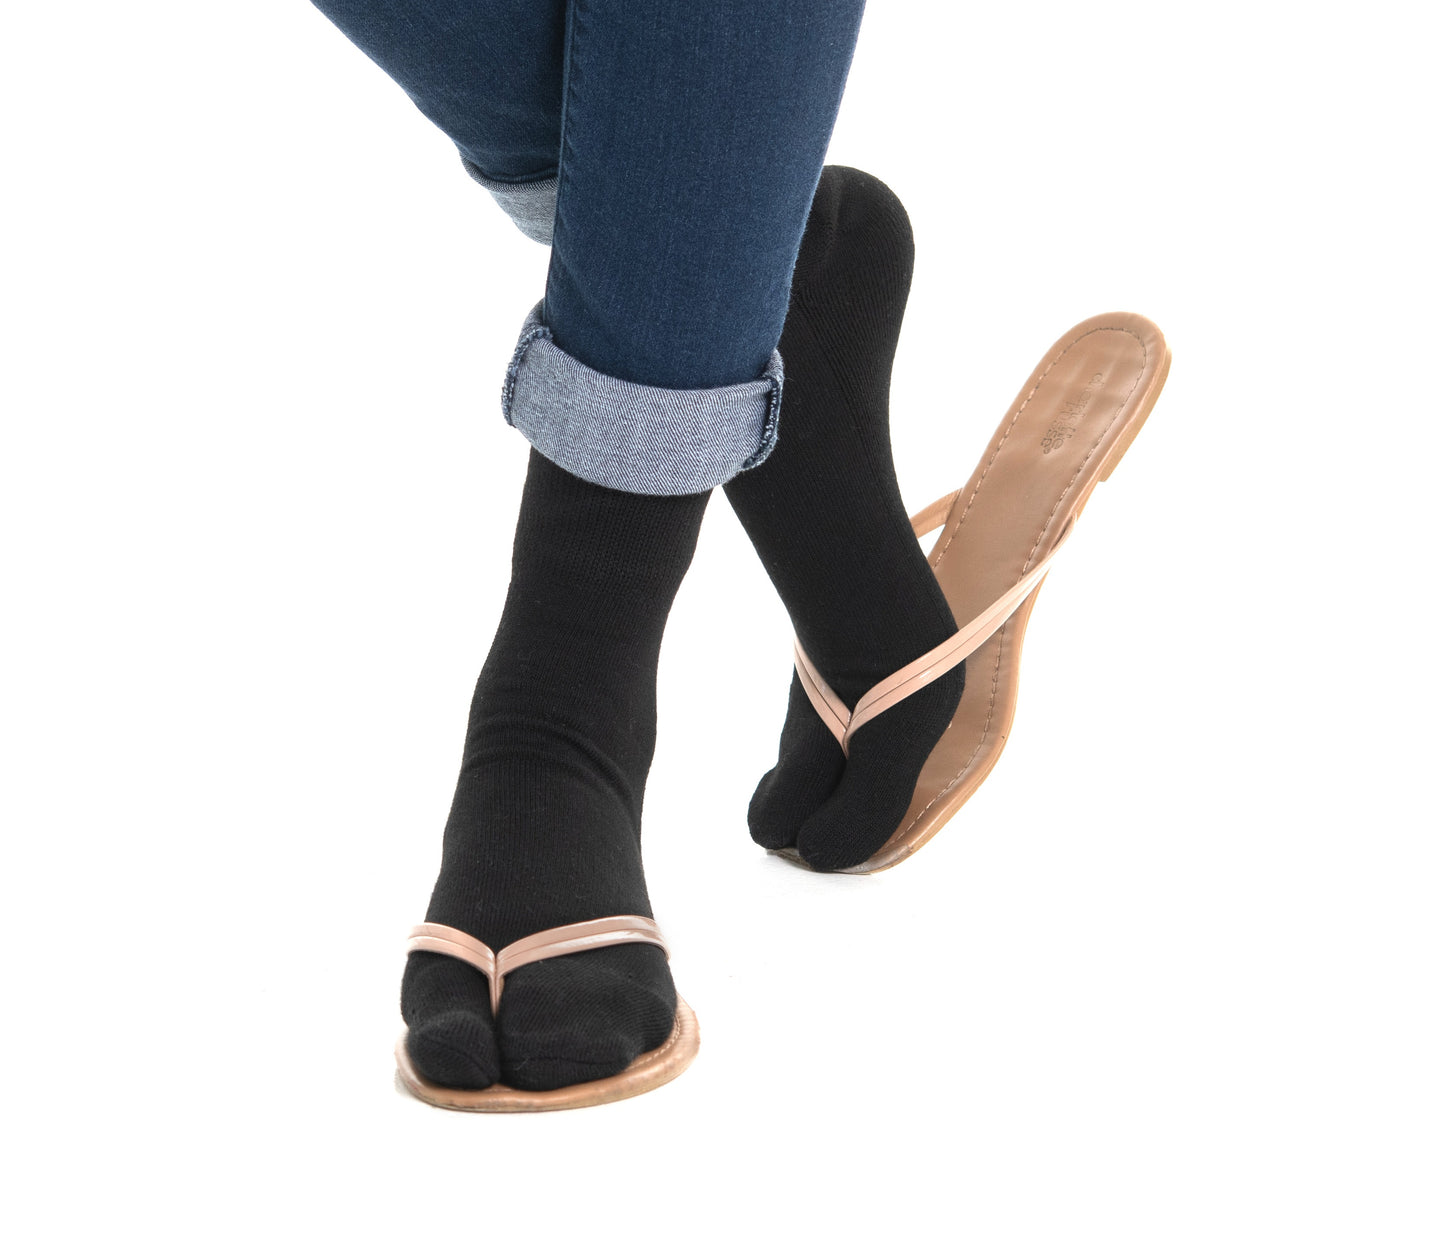 V-Toe Flip-Flop Socks Brand 3 Pairs Thicker Mini Crew - Black Solids